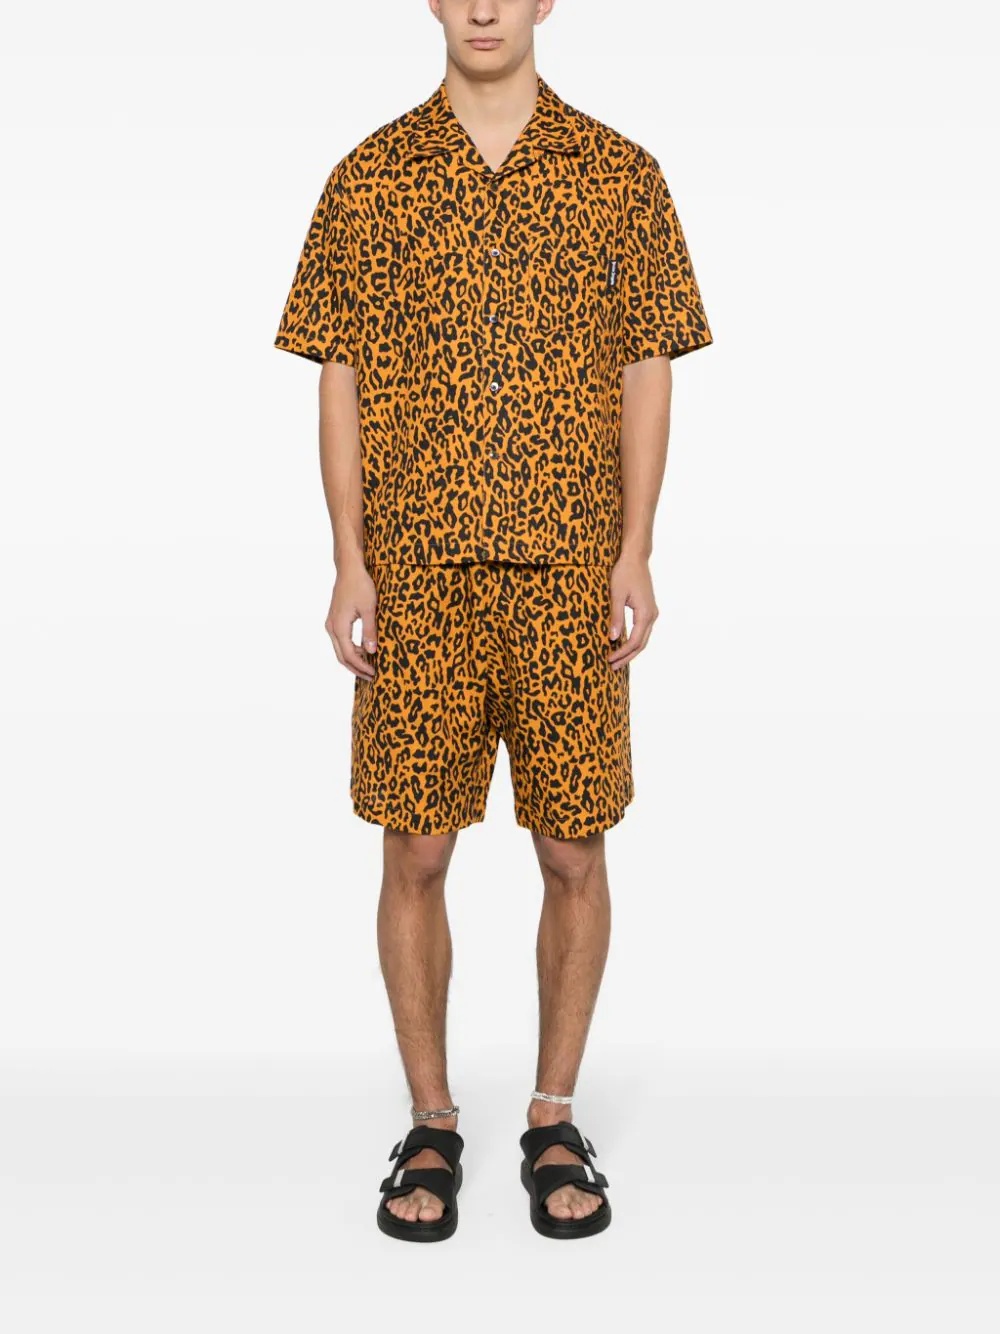 Cheetah Shorts - 2